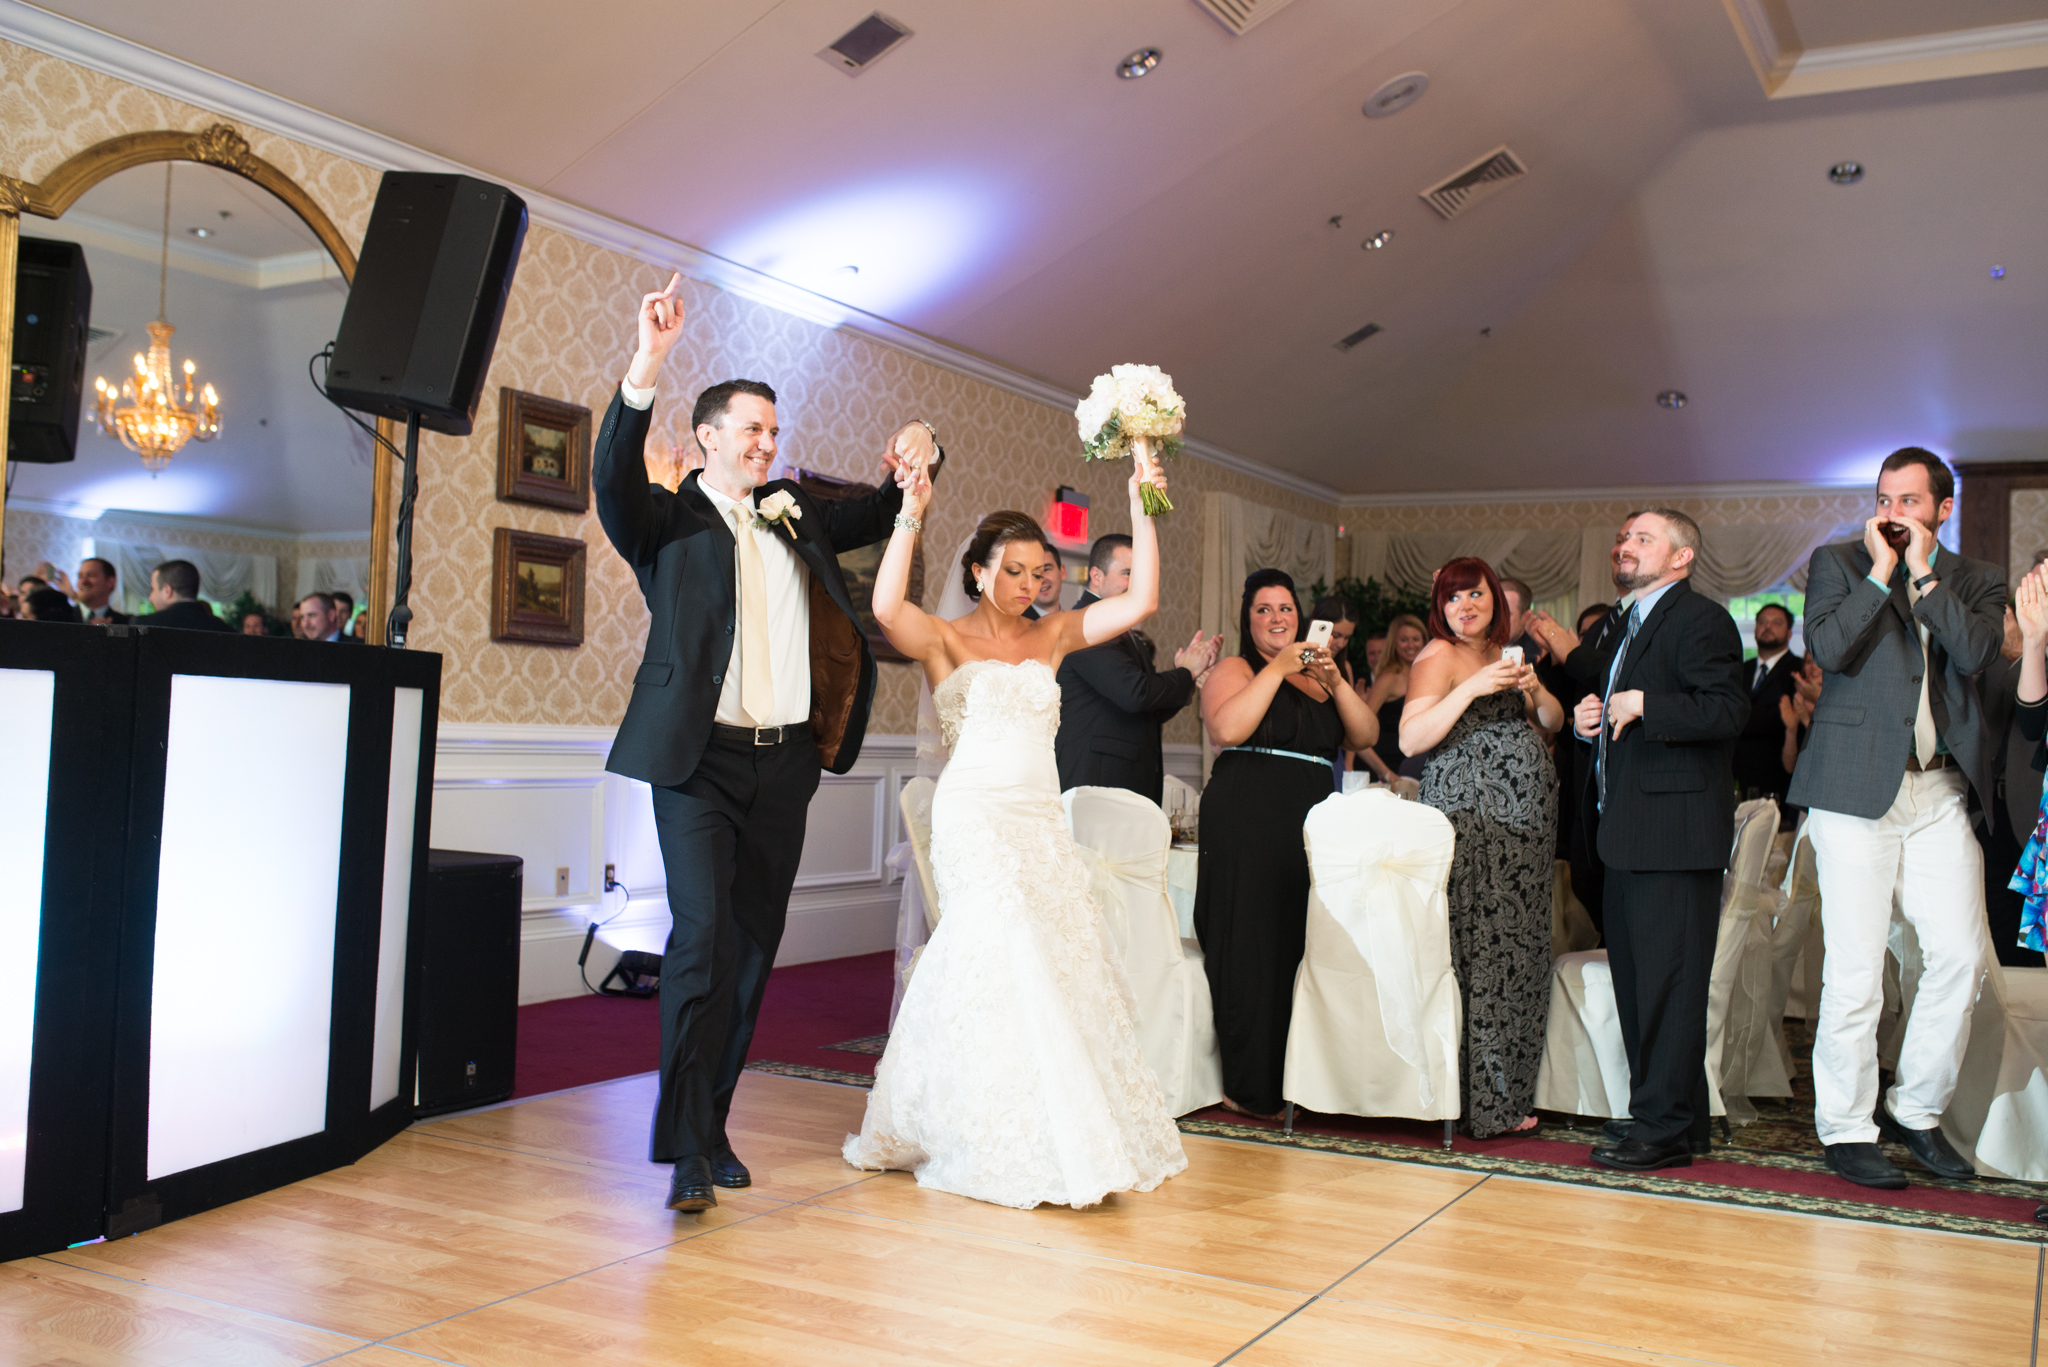 Leah + Kevin - Laurel Creek Country Club Wedding - Mount Laurel New Jersey Wedding Photographer - Alison Dunn Photography photo